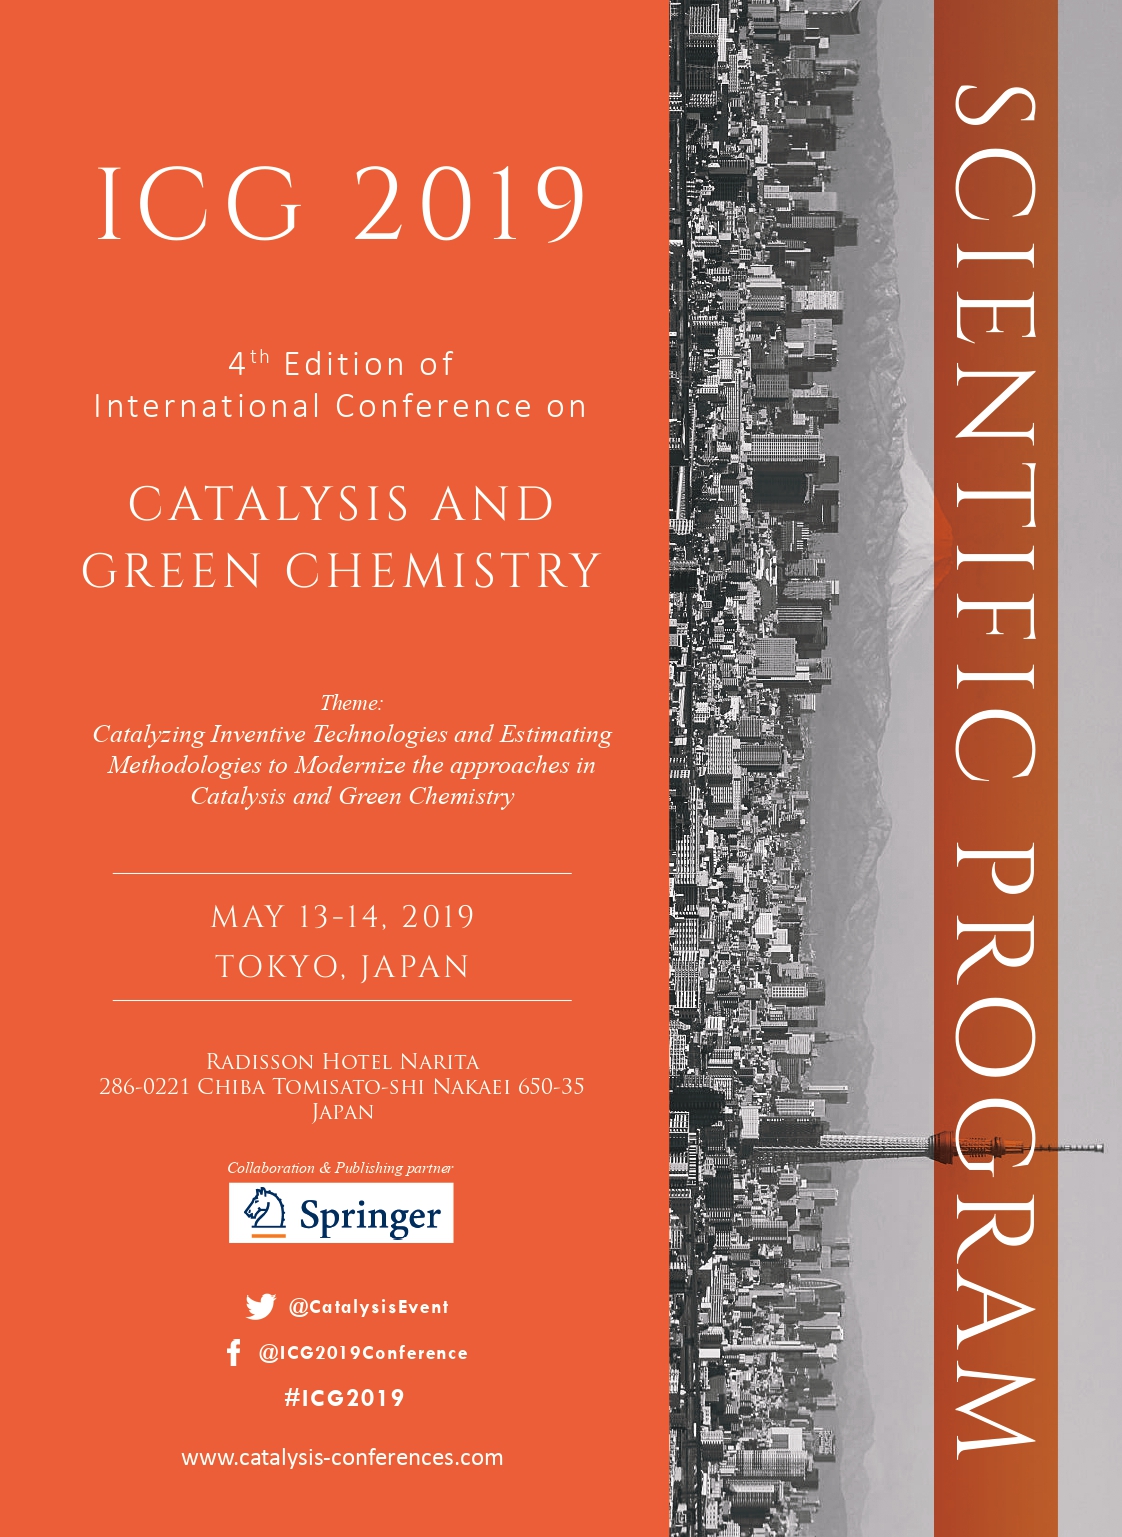 Catalysis and Green Chemistry | Tokyo, Japan Program